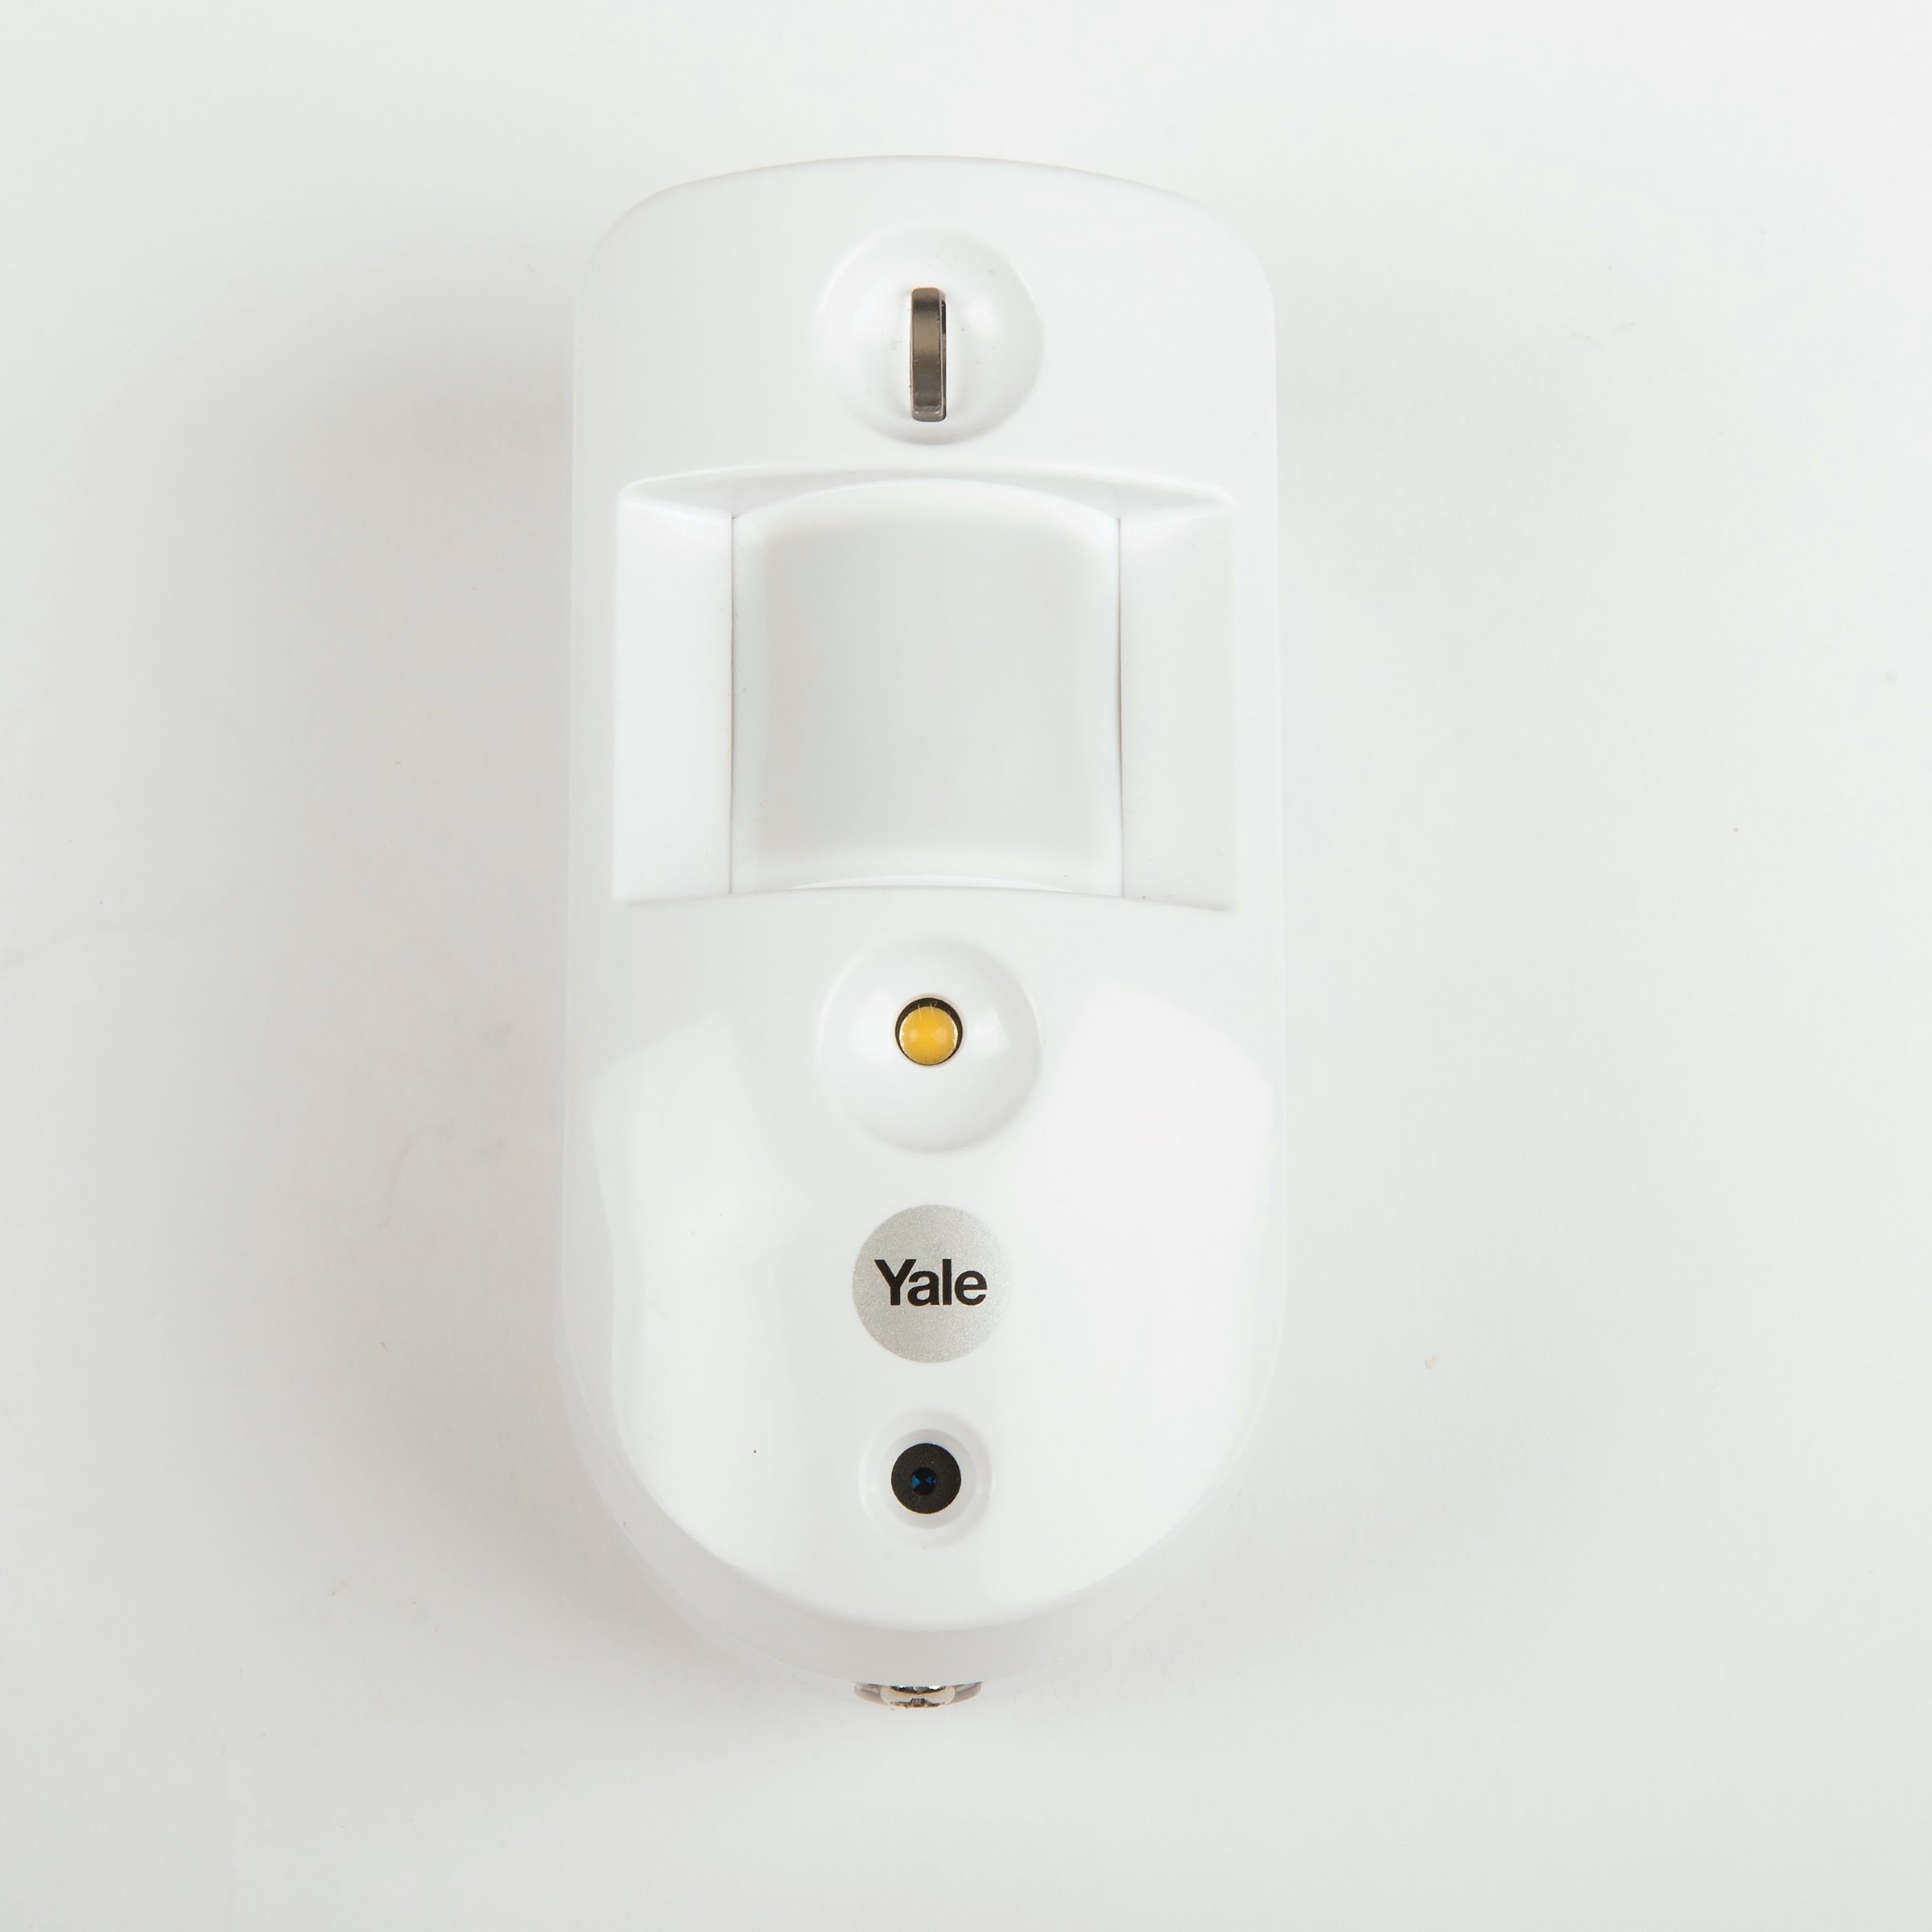 Yale Smart Home Alarm PIR Video Camera